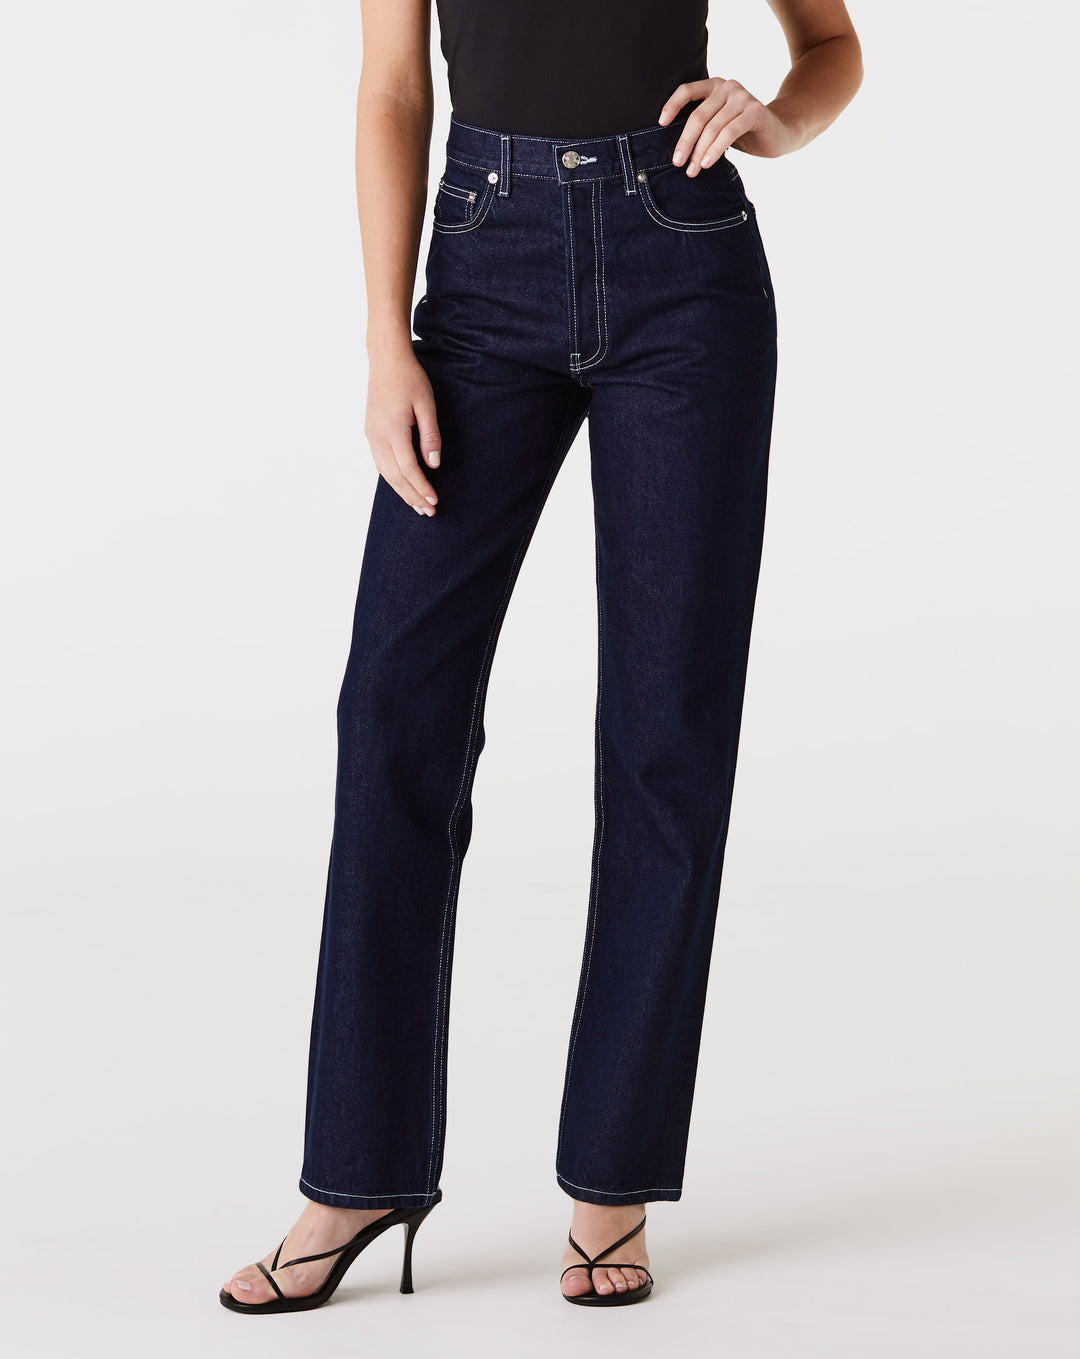 EB Denim Women's High Rise Straight Jeans  - XHIBITION